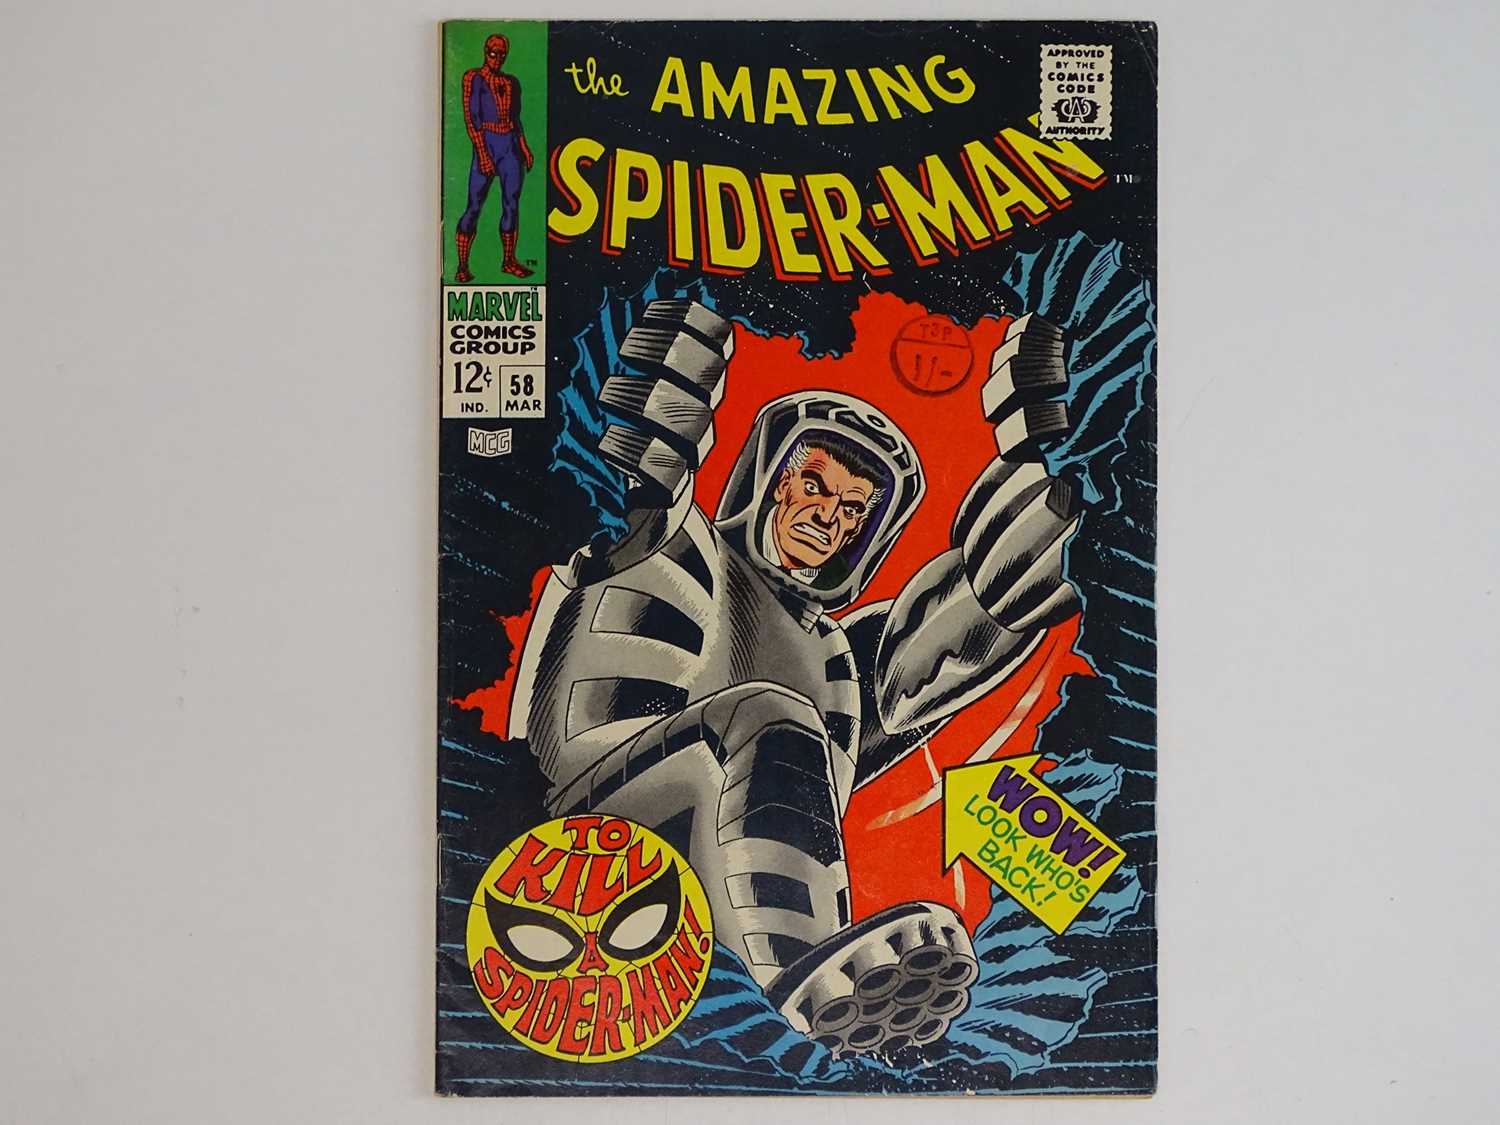 AMAZING SPIDER-MAN #58 - (1968 - MARVEL - UK Cover Price) - J. Jonah Jameson with Professor Smythe